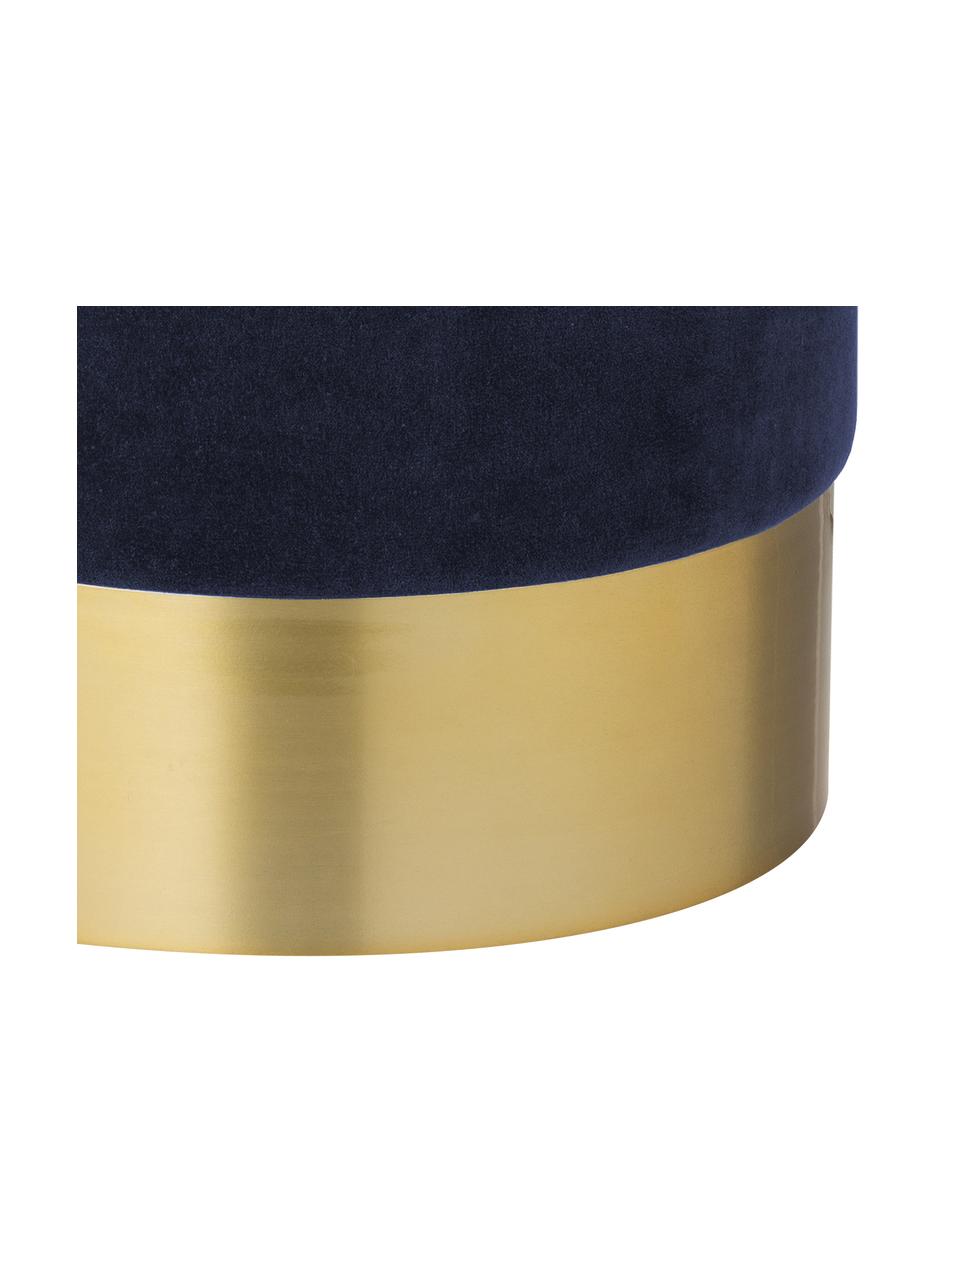 Tabouret en velours Harlow, Bleu marine, couleur dorée